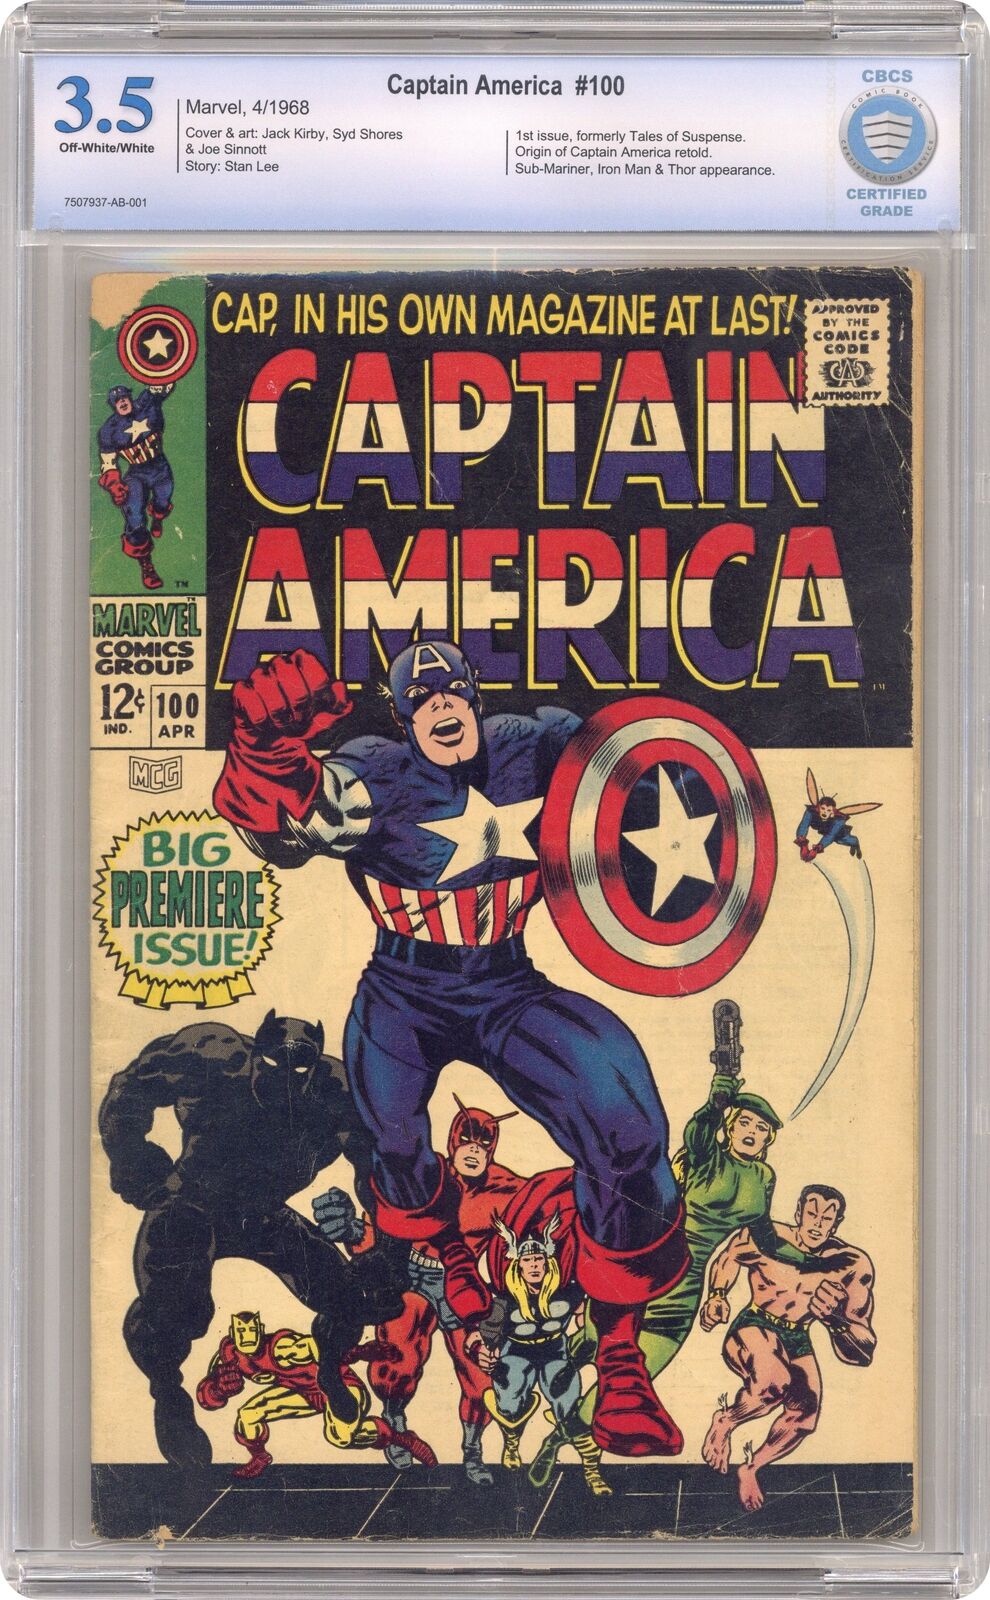 Captain America #100 CBCS 3.5 1968 7507937-AB-001